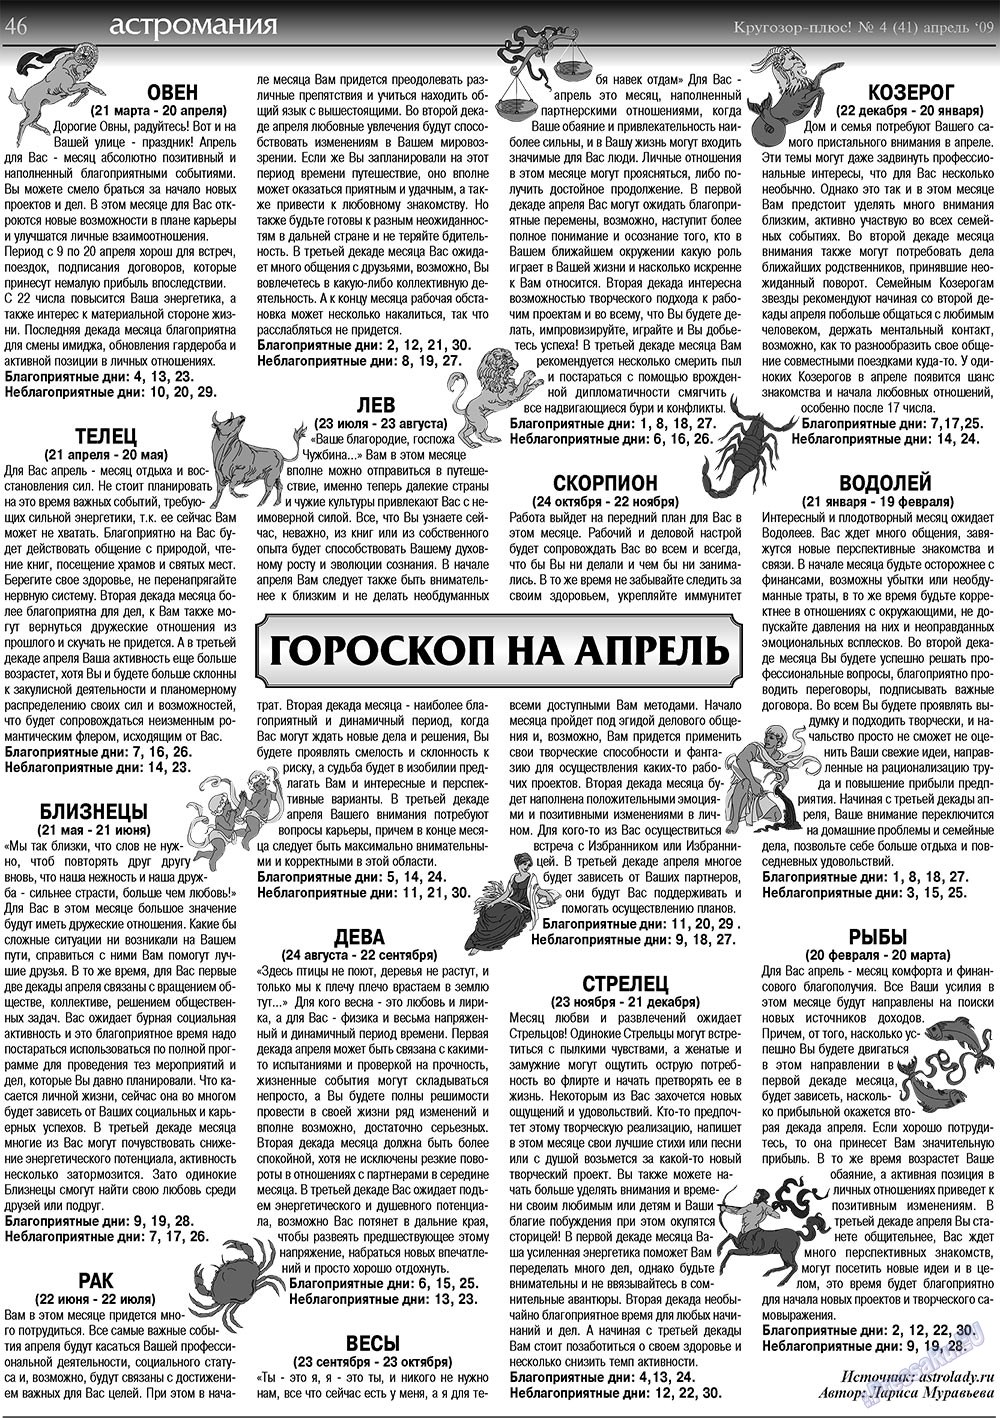 Кругозор плюс! (газета). 2009 год, номер 4, стр. 46